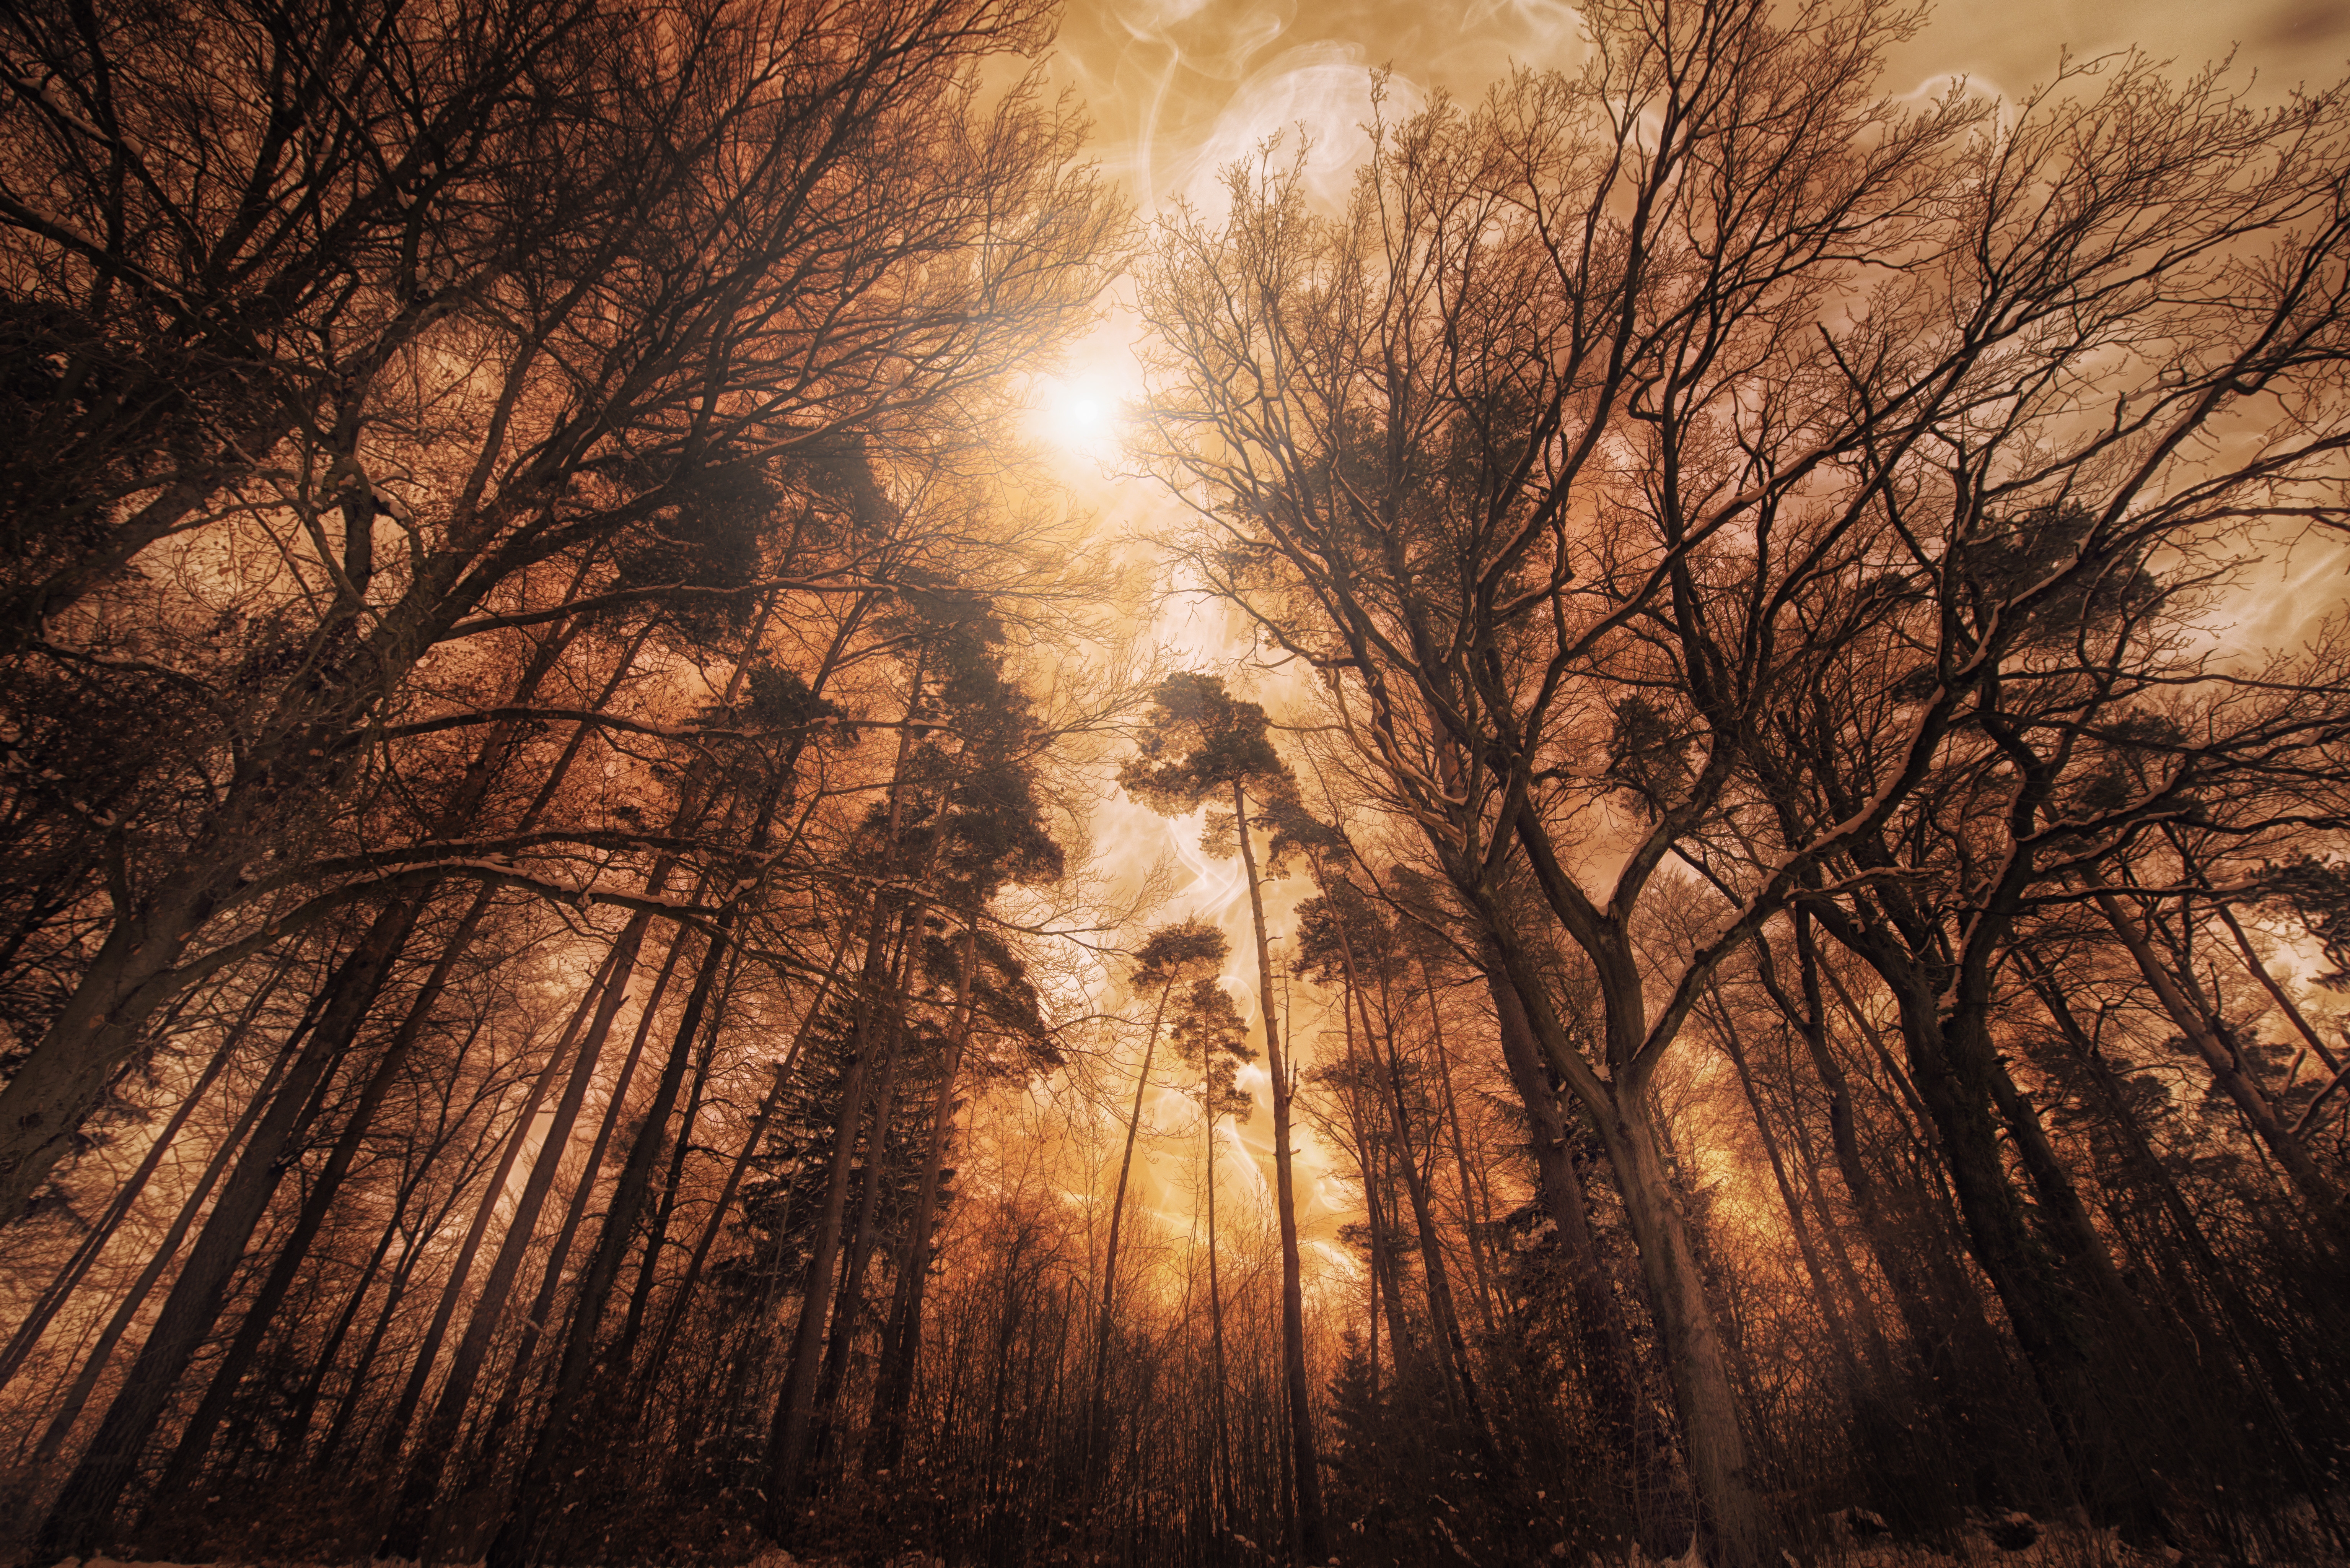 HD wallpaper, Fire Effect, Woods, 5K, Tall Trees, Landscape, Digital Composition, Forest